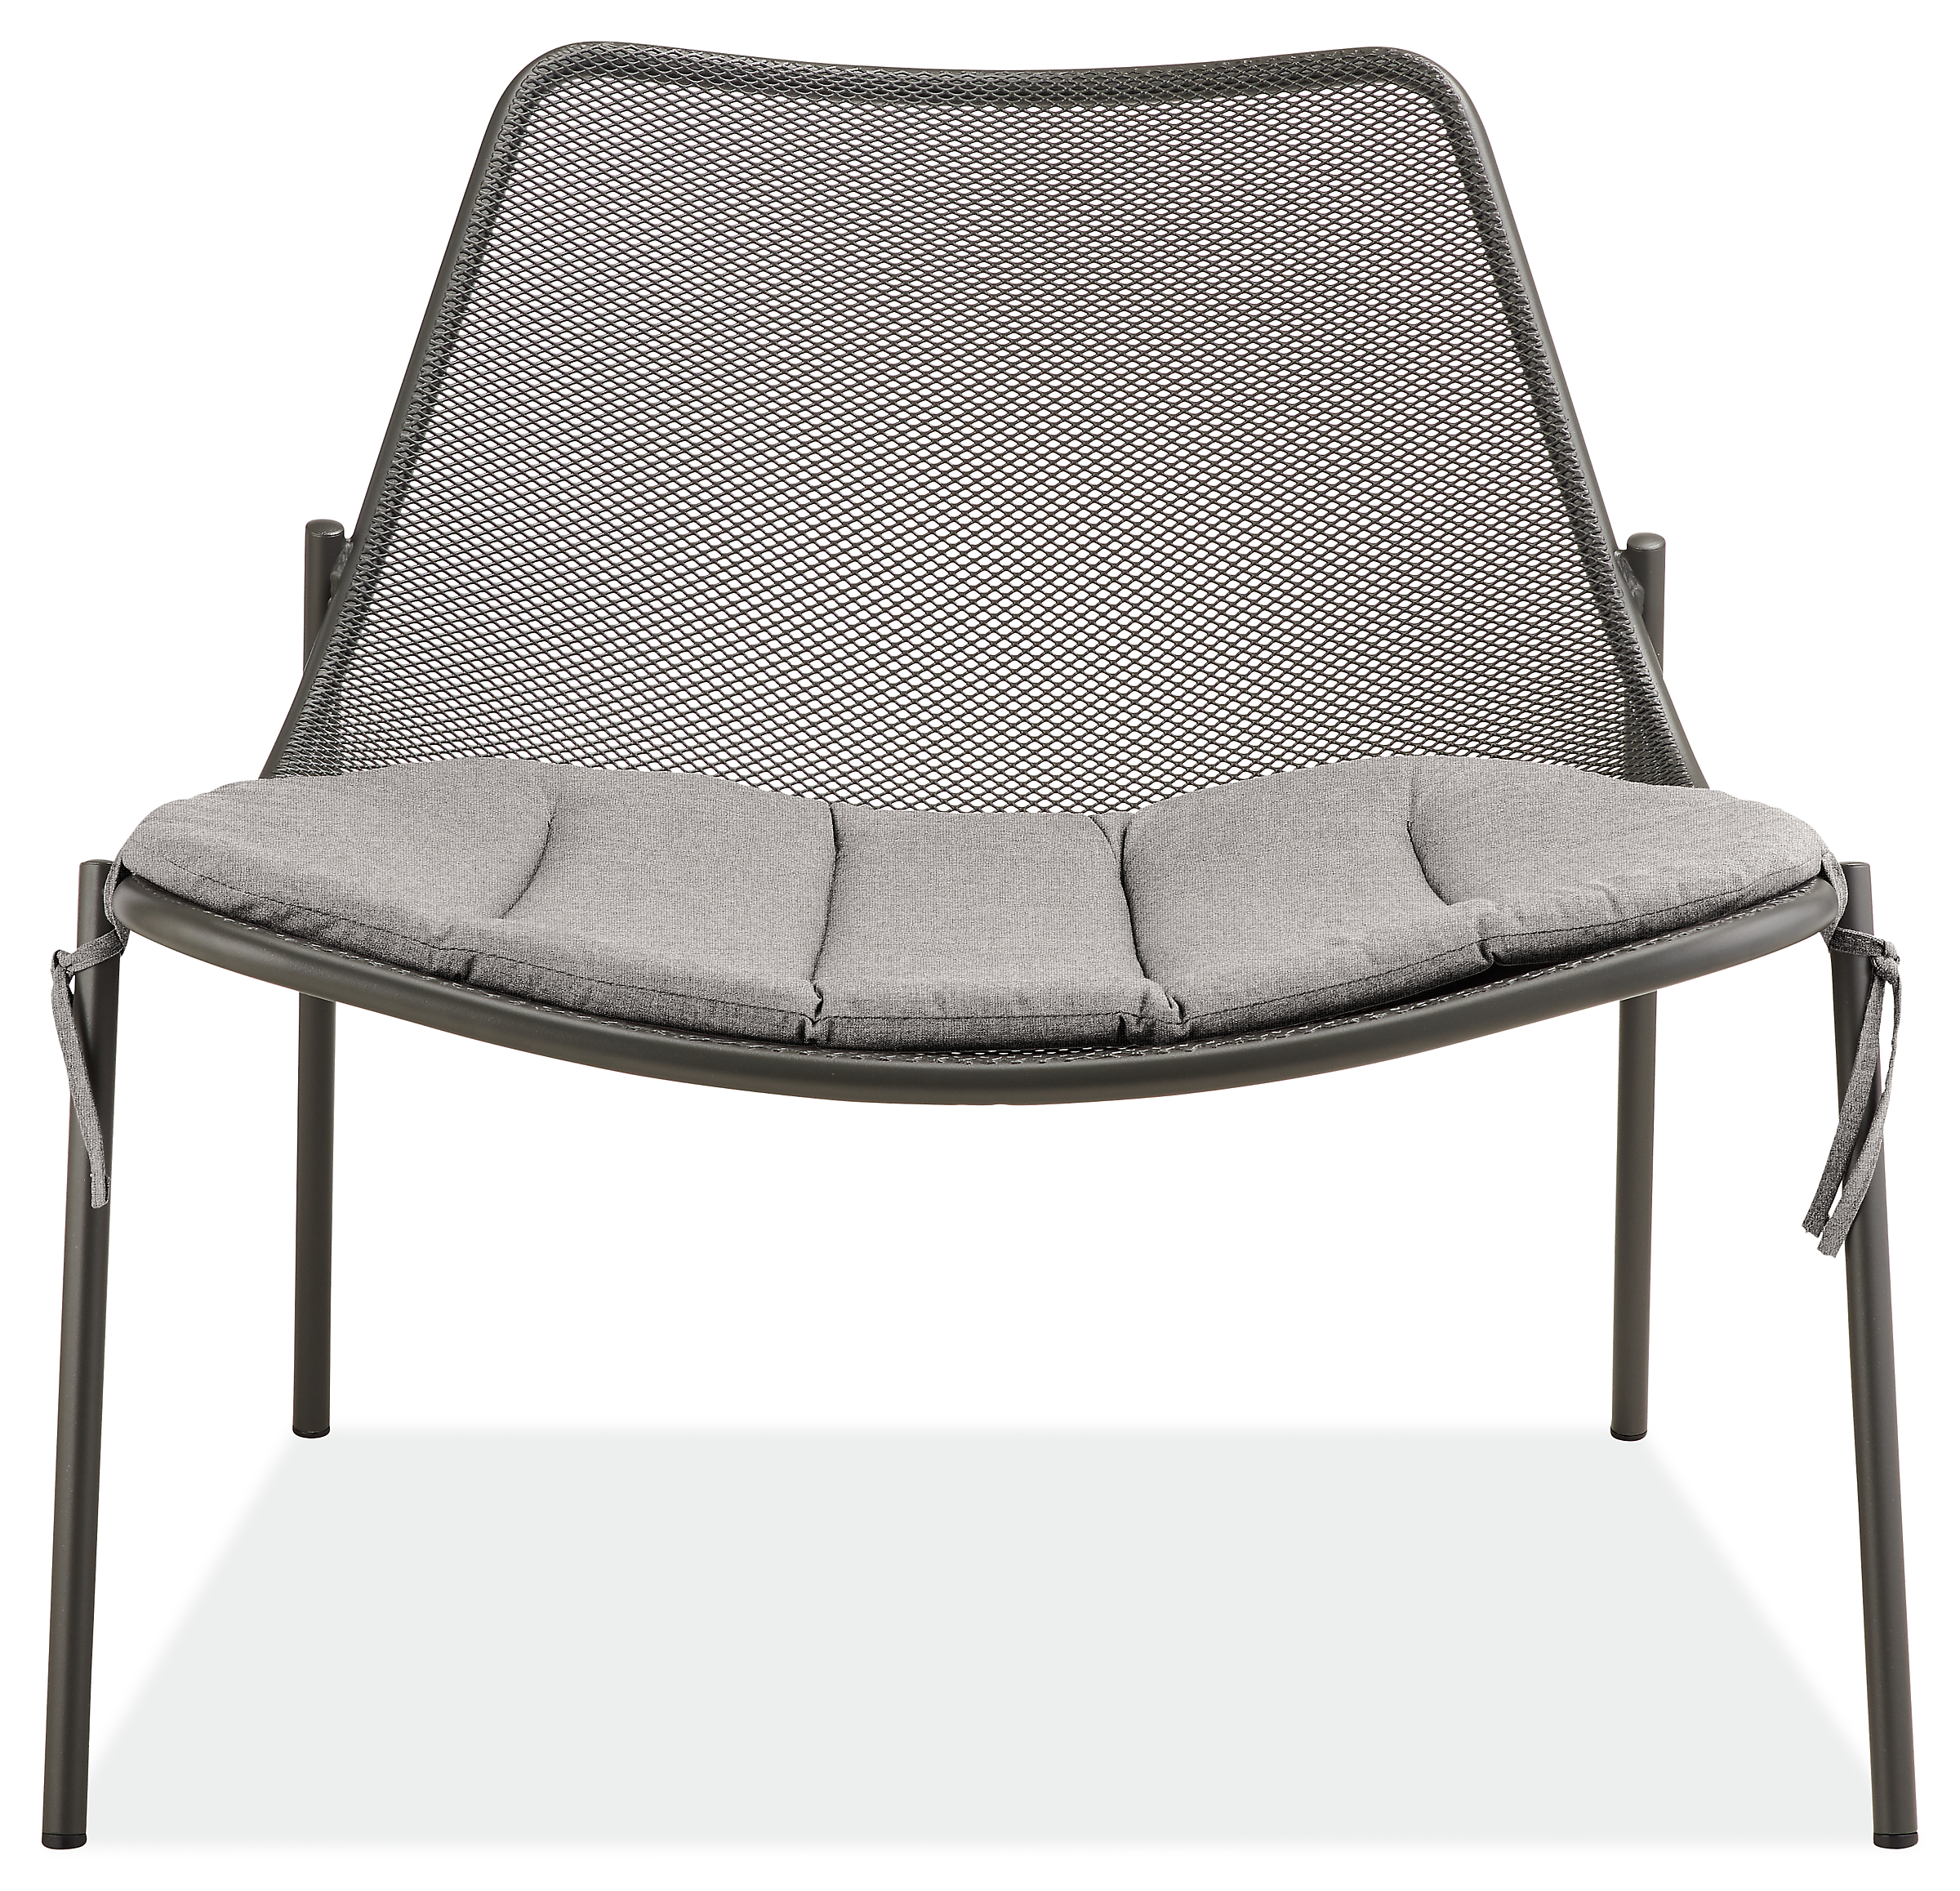 Soleil Seat Cushion for Lounge Chair